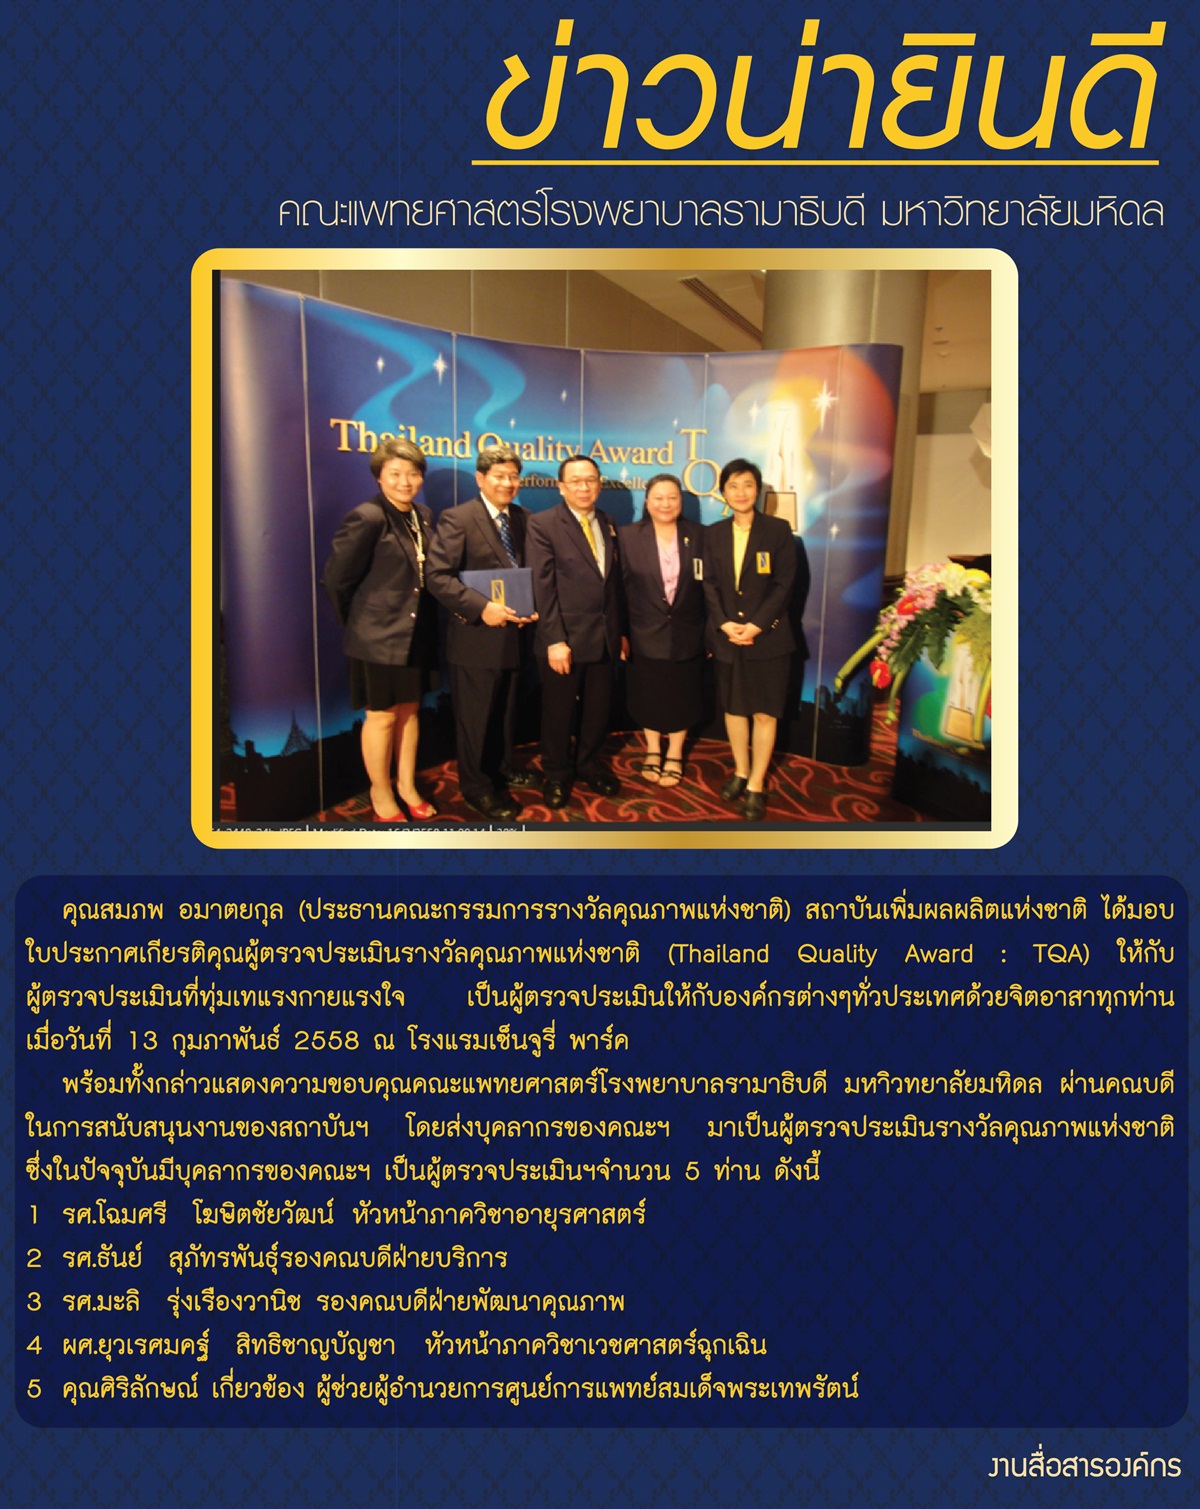 Thailand Quality Award : TQA